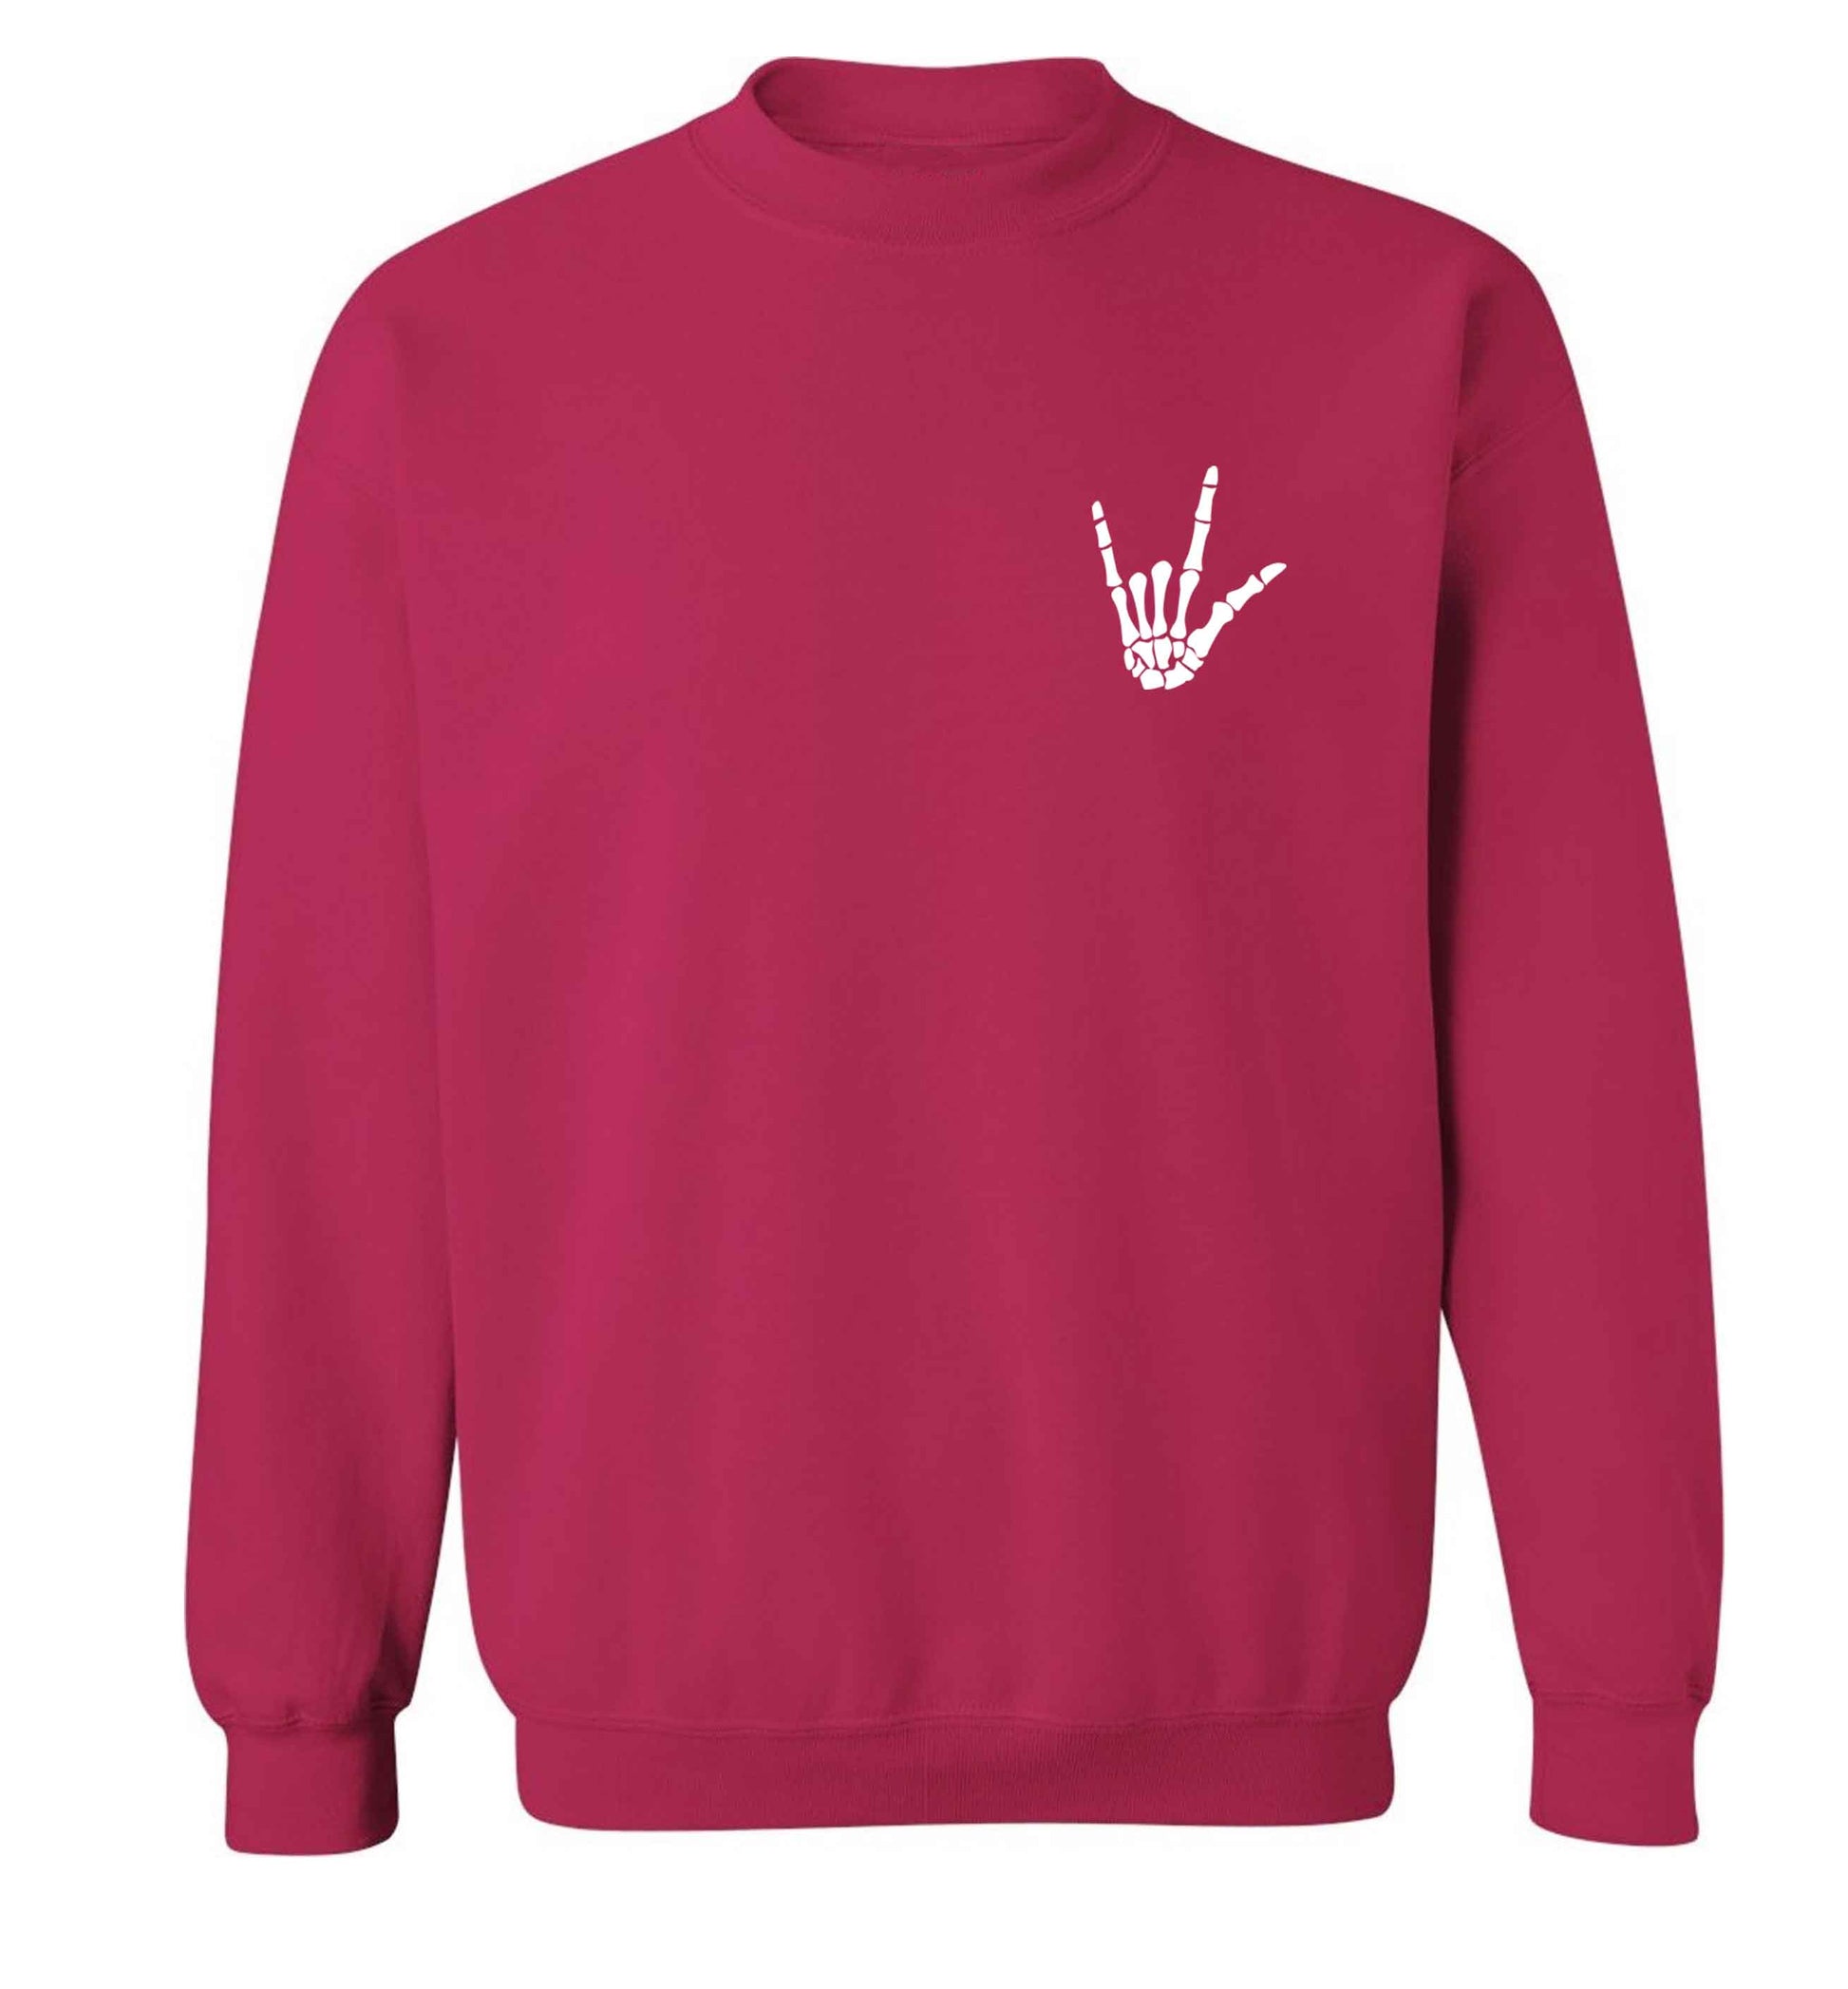 Skeleton Hand Pocket adult's unisex pink sweater 2XL